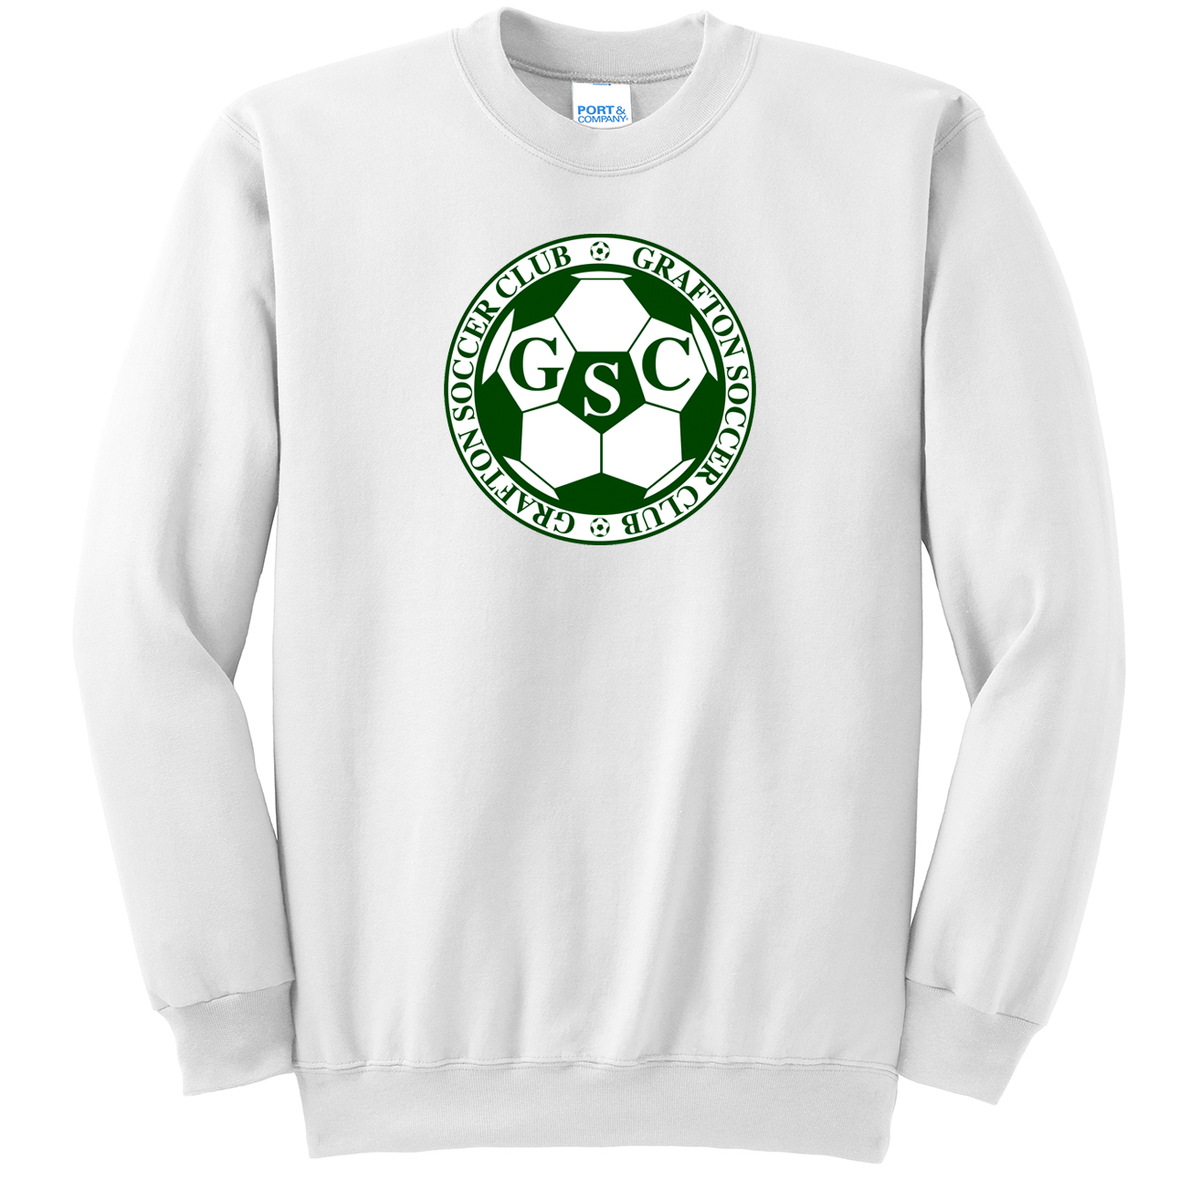 Grafton Youth Soccer Club Crew Neck Sweater